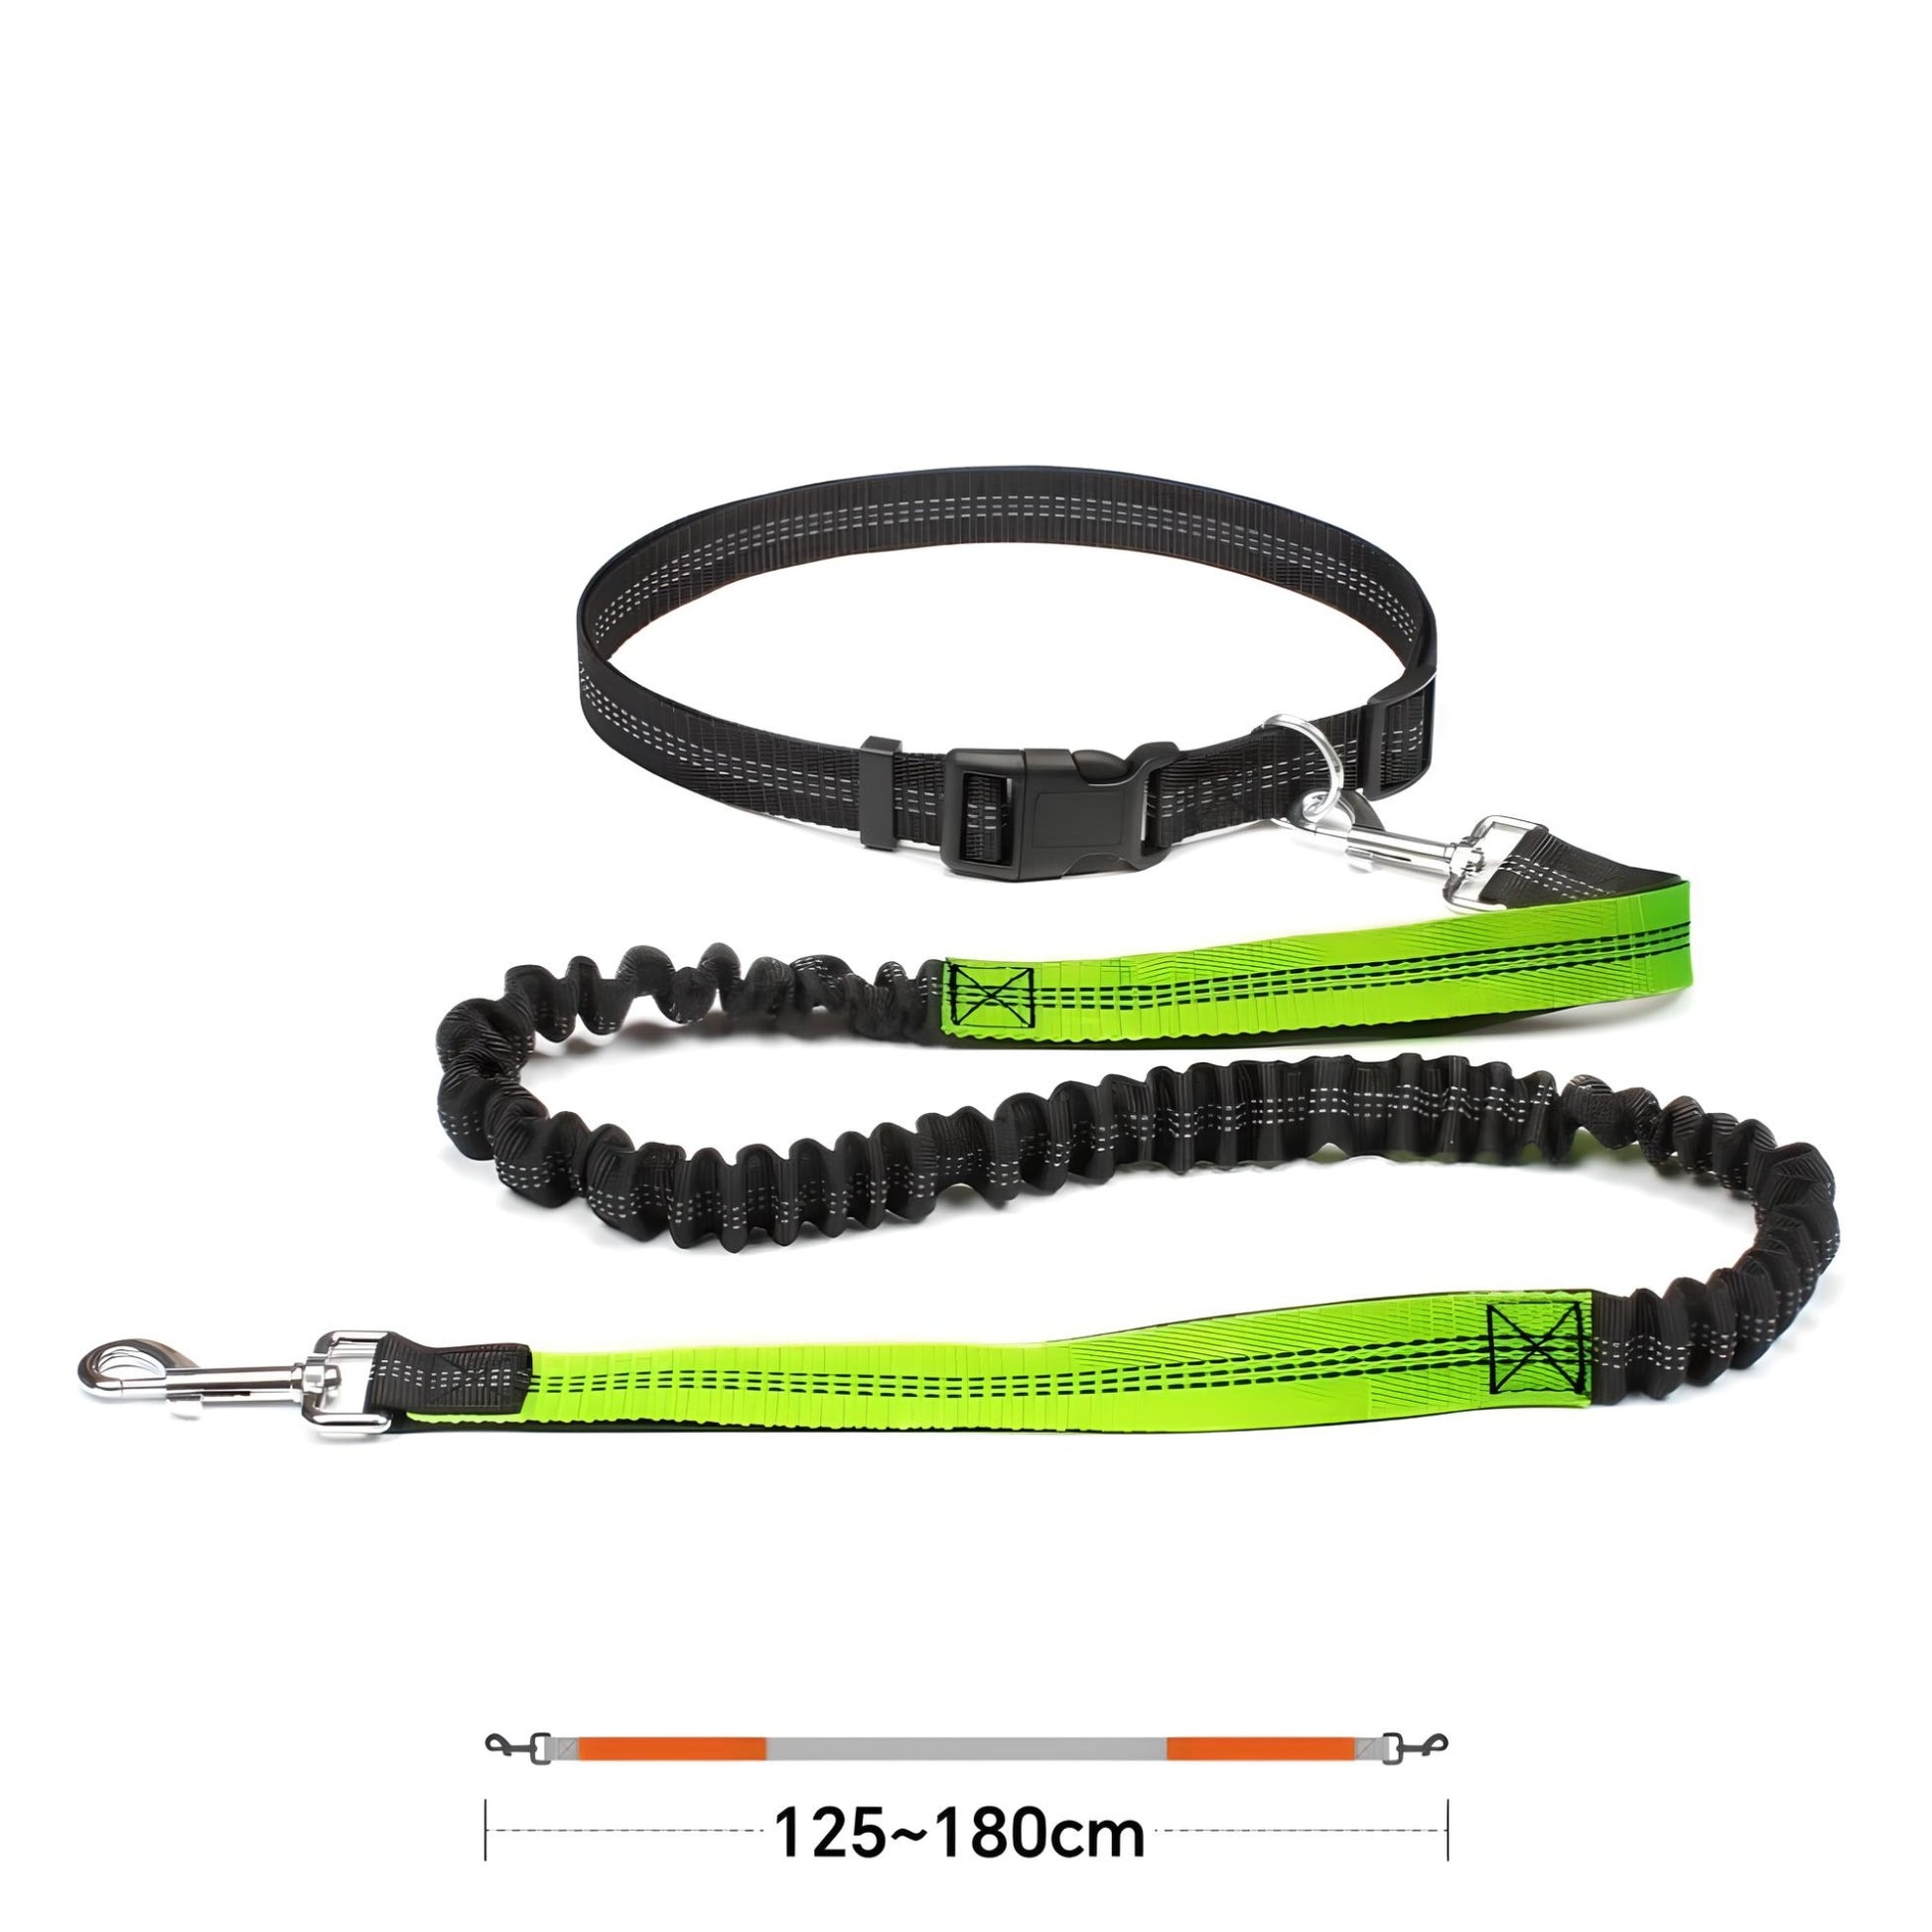 waist leash for dog walking green